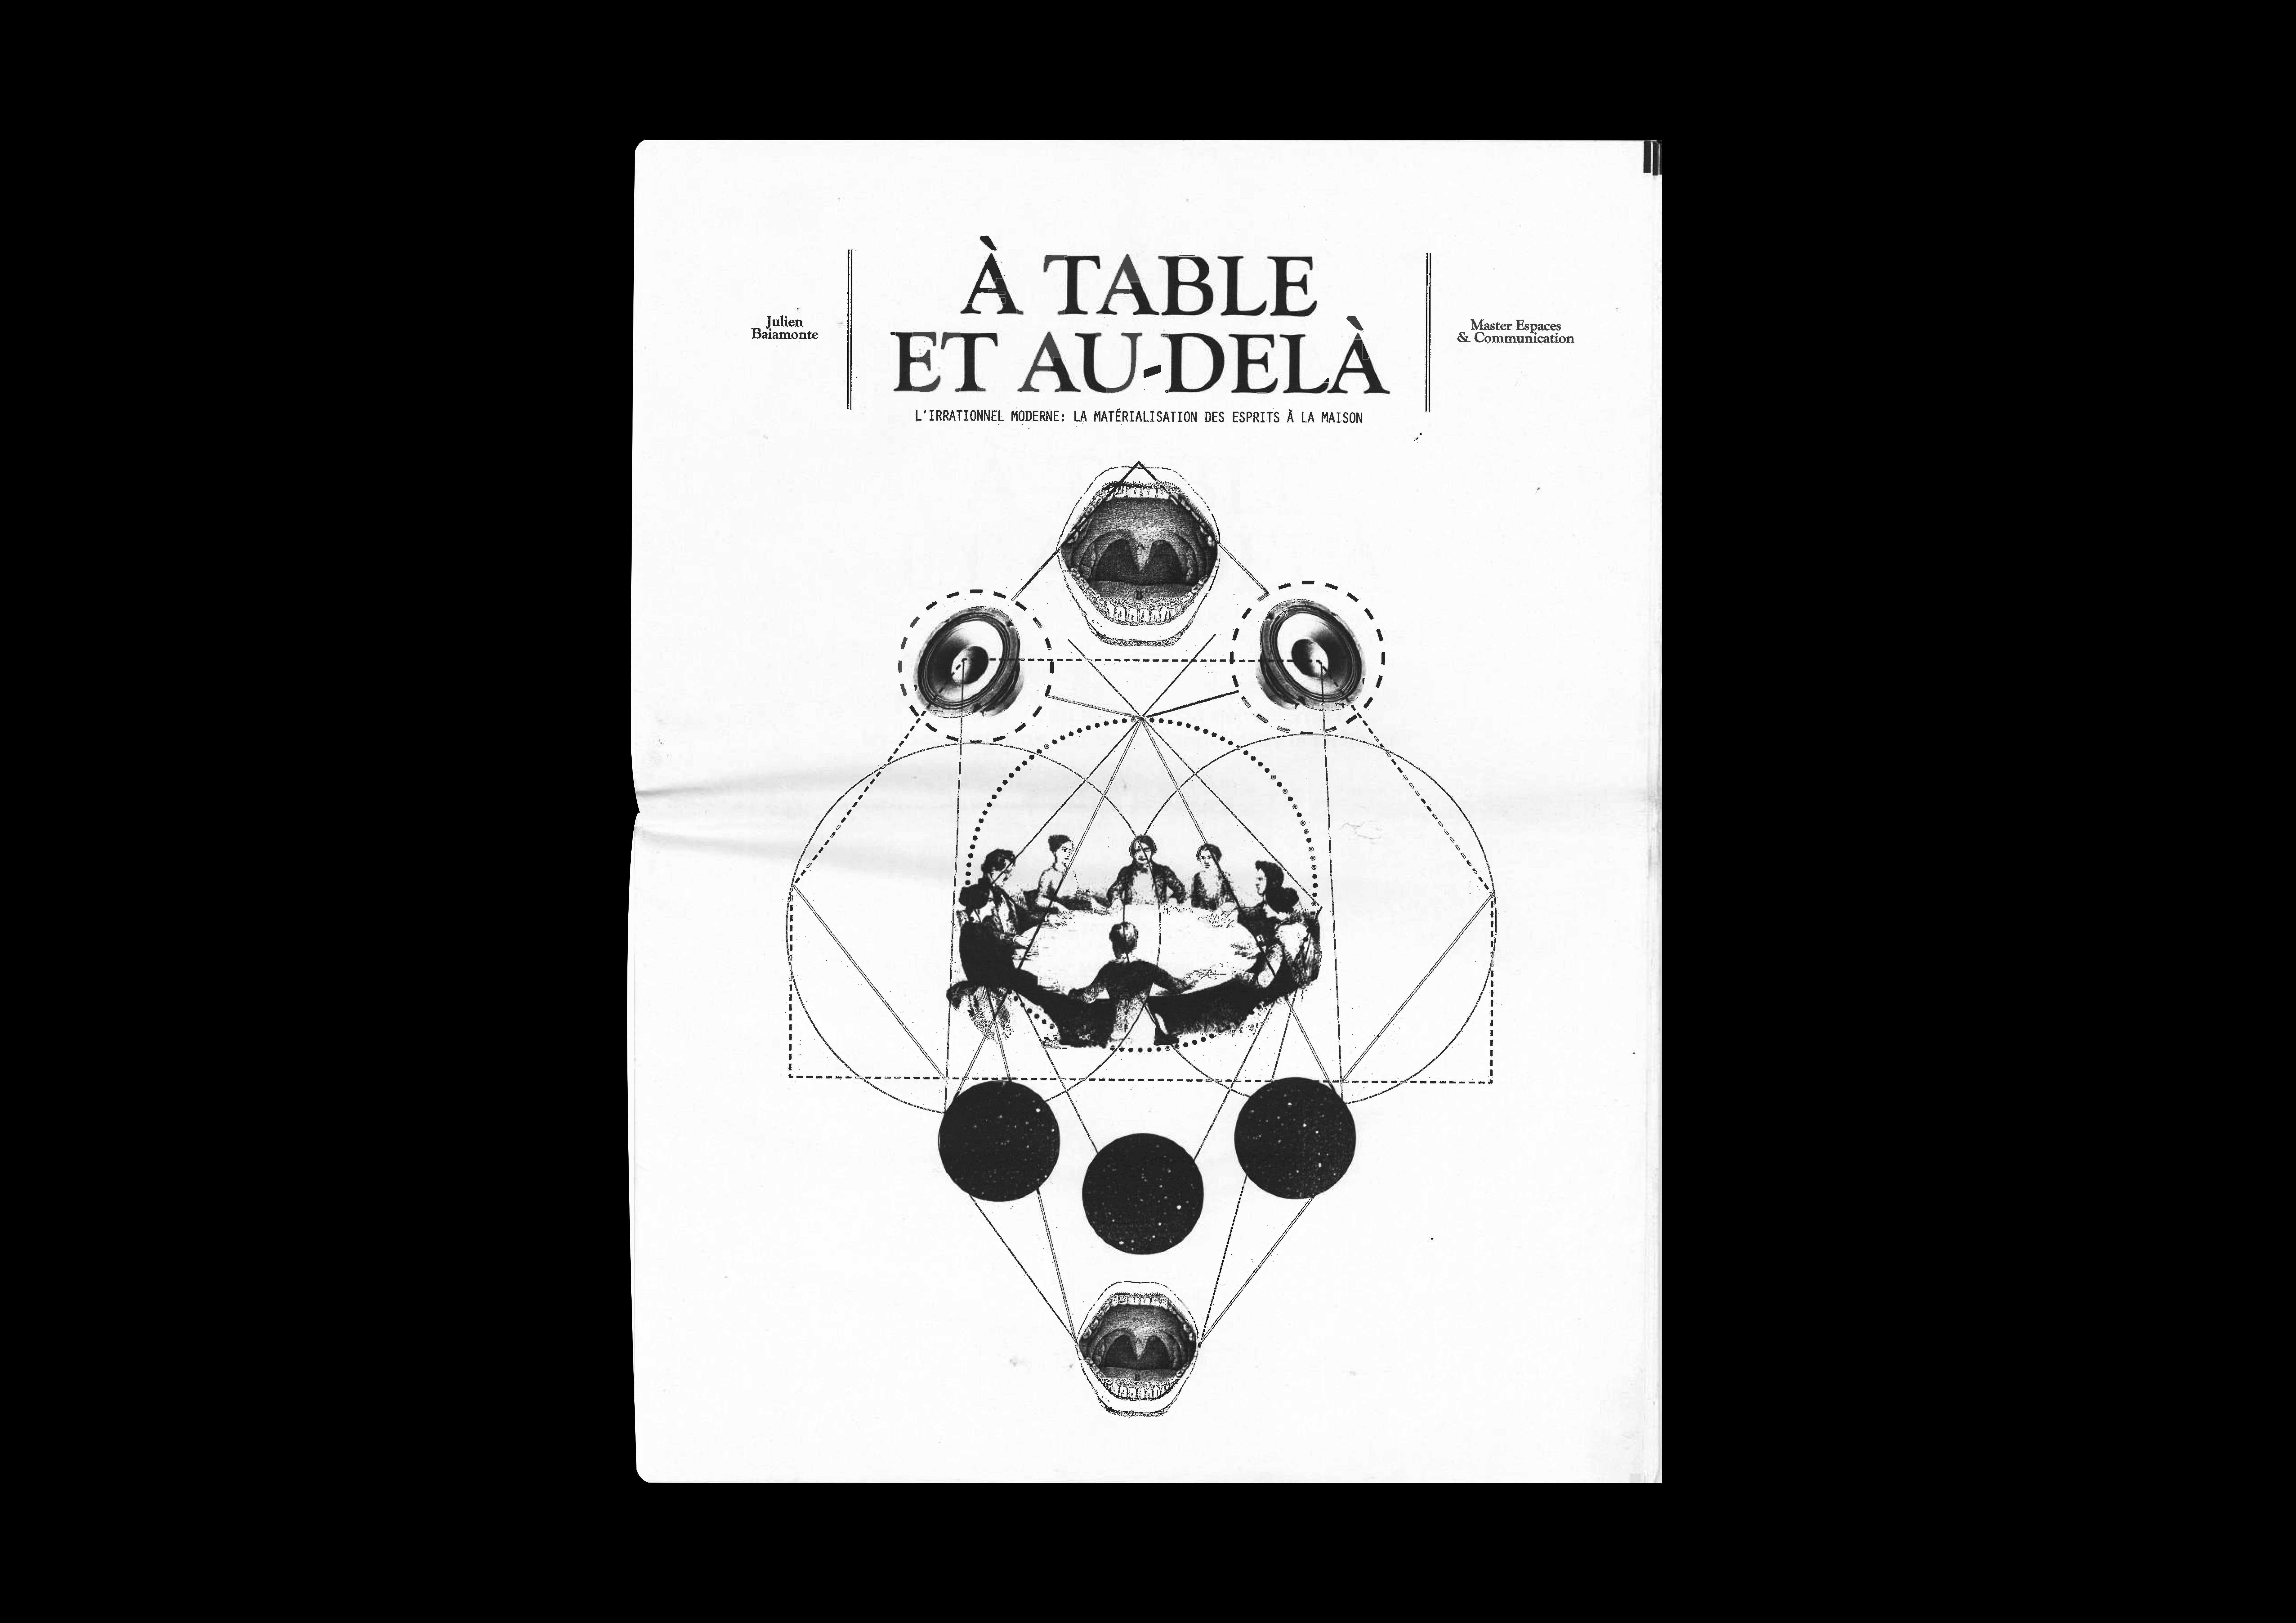 http://julienbaiamonte.com/content/1-projects/a-table-au-dela/atable_002.jpg